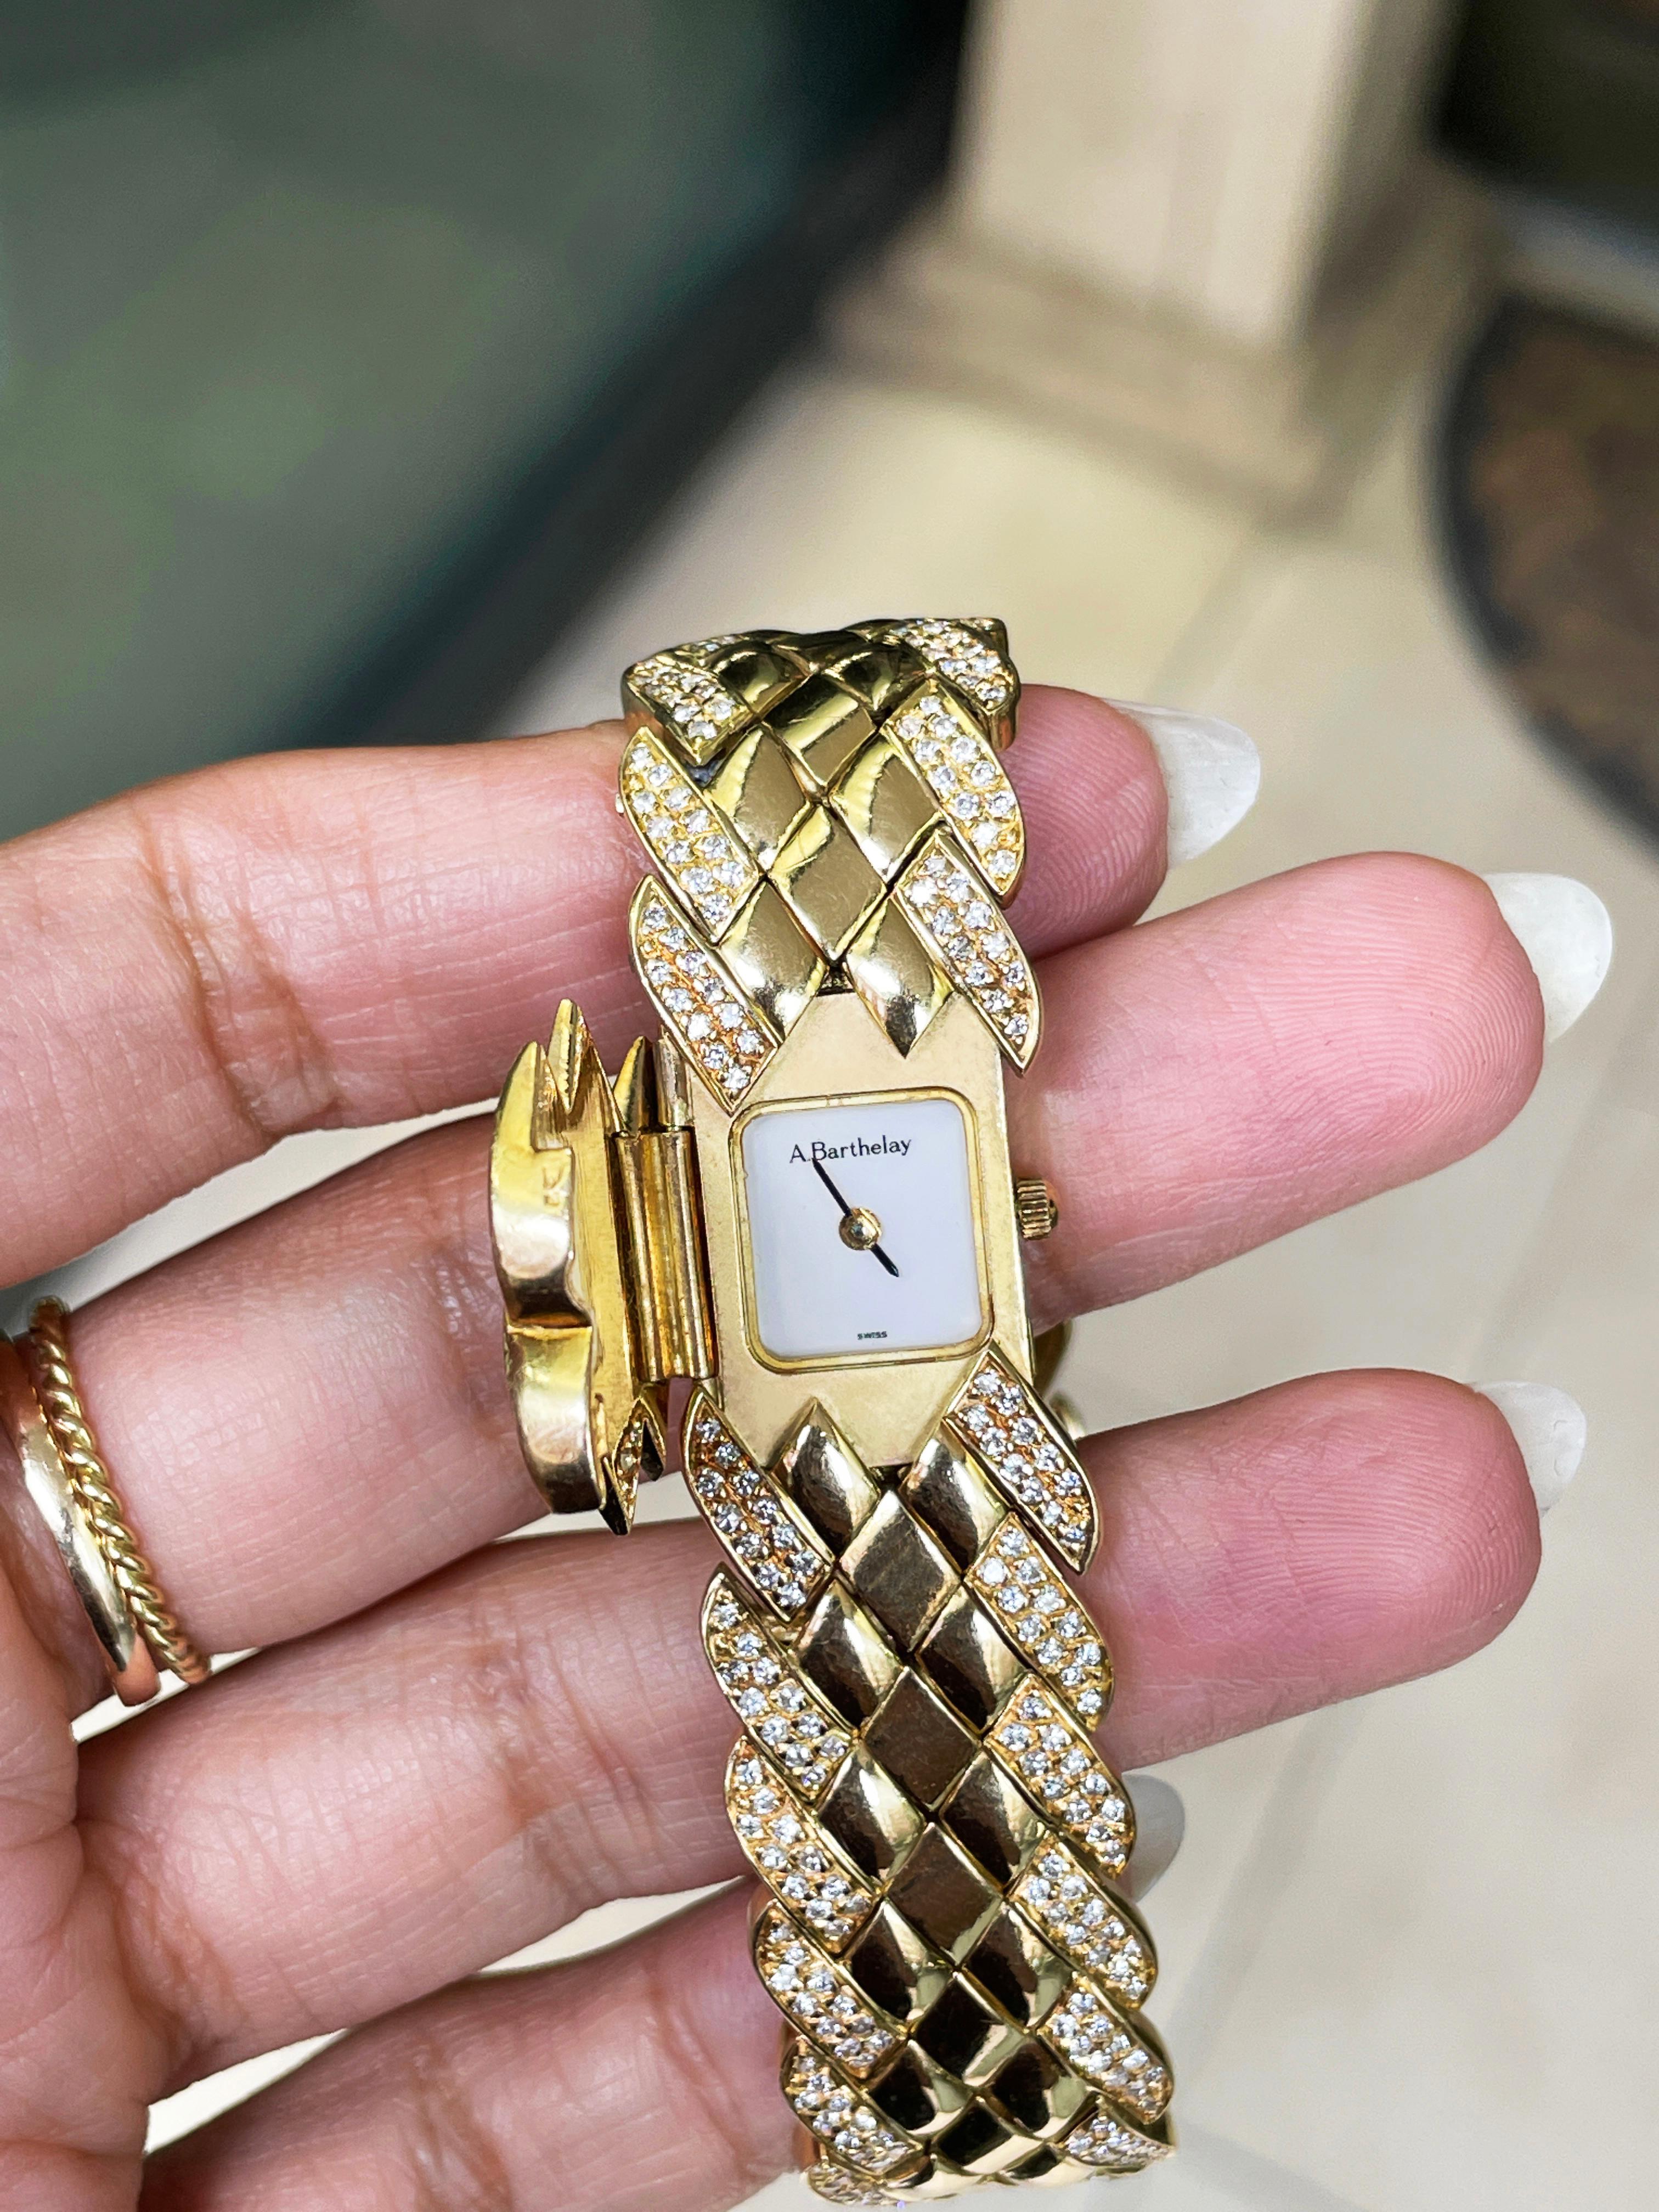 Retro Alexis Barthelay Ladies 18 Carat Gold and Diamond Bracelet Watch For Sale